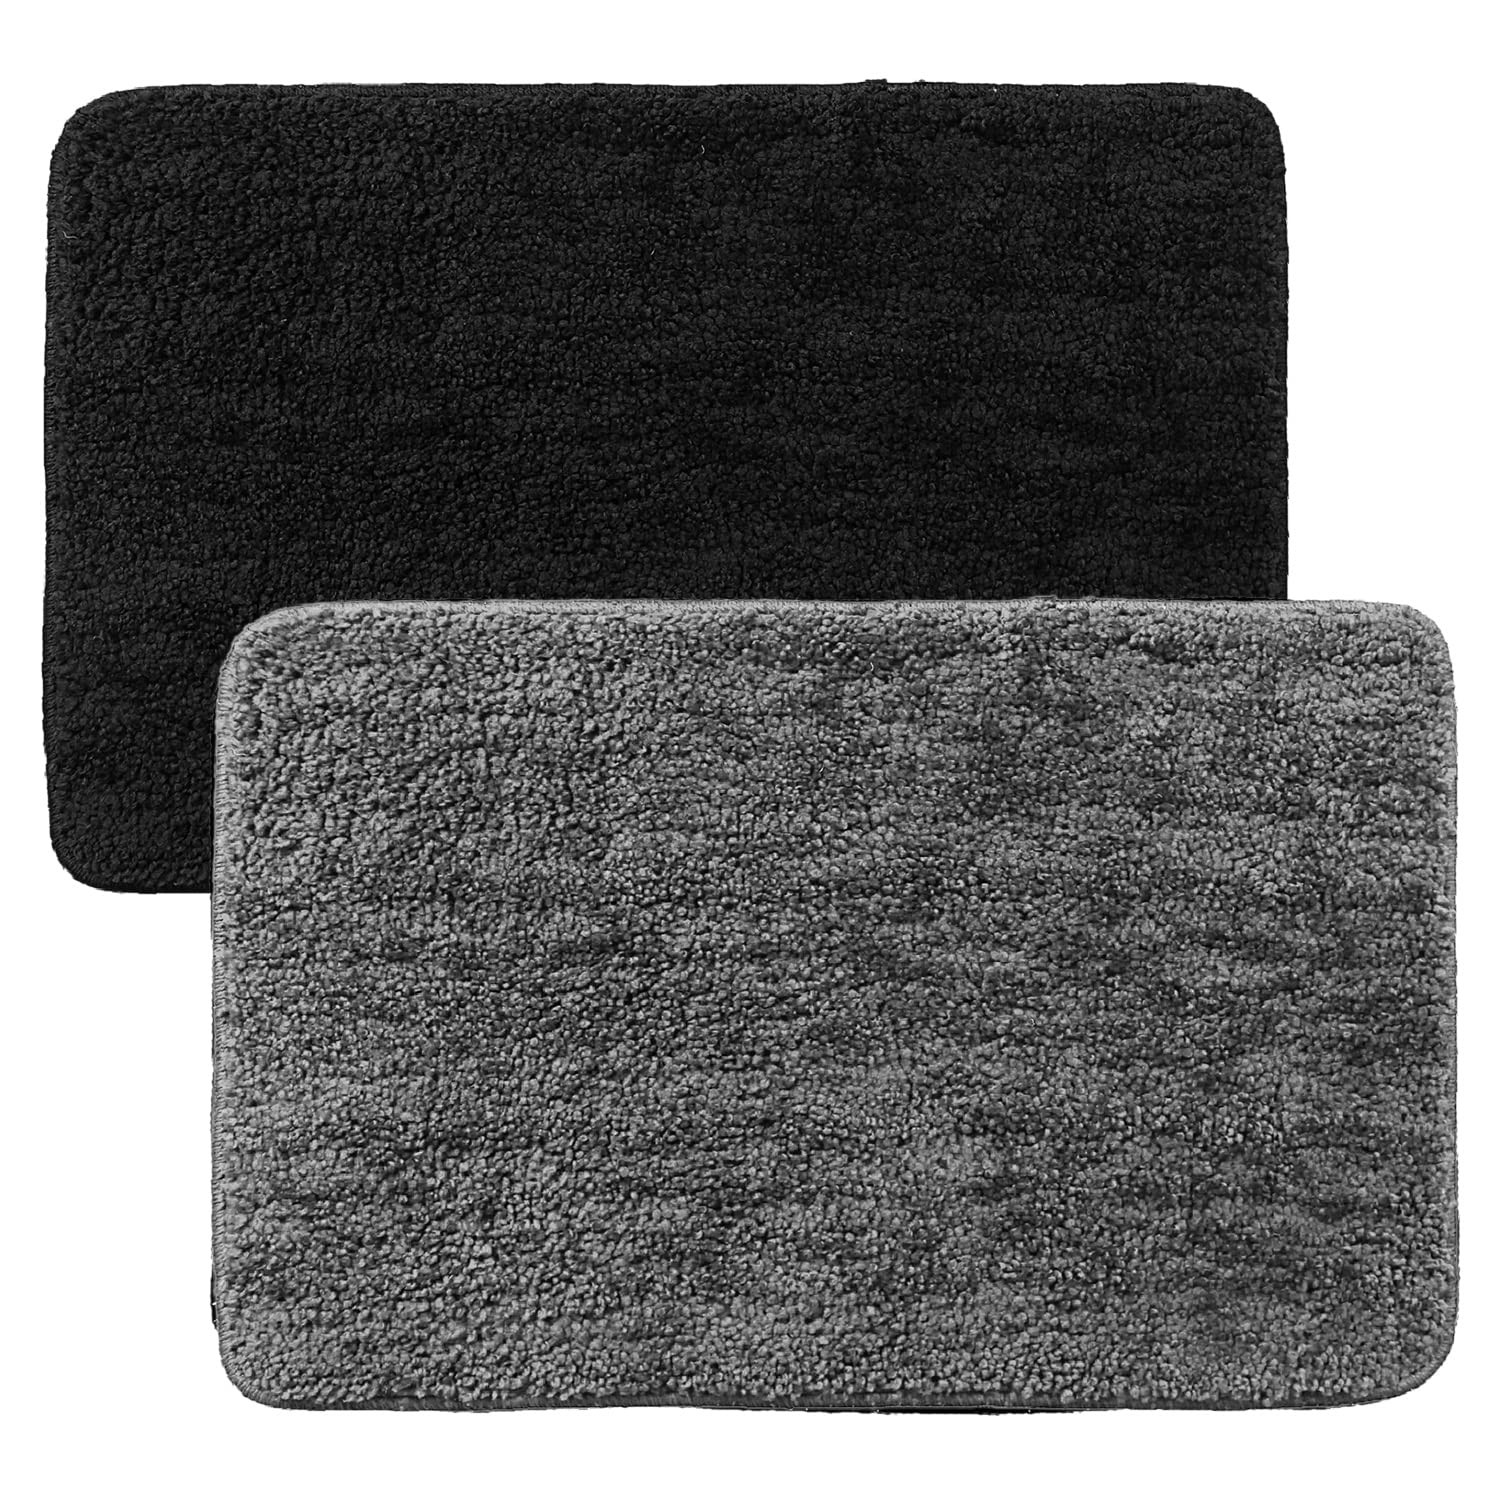 Kuber Industries Microfiber Doormats|Non-Skid Water Absorbant Fluffy Floor mat|Entrance Mat for Kitchen,Bedside,Door,Living,Prayer Room,60x40 cm,Pack of 2 (Black & Gray)